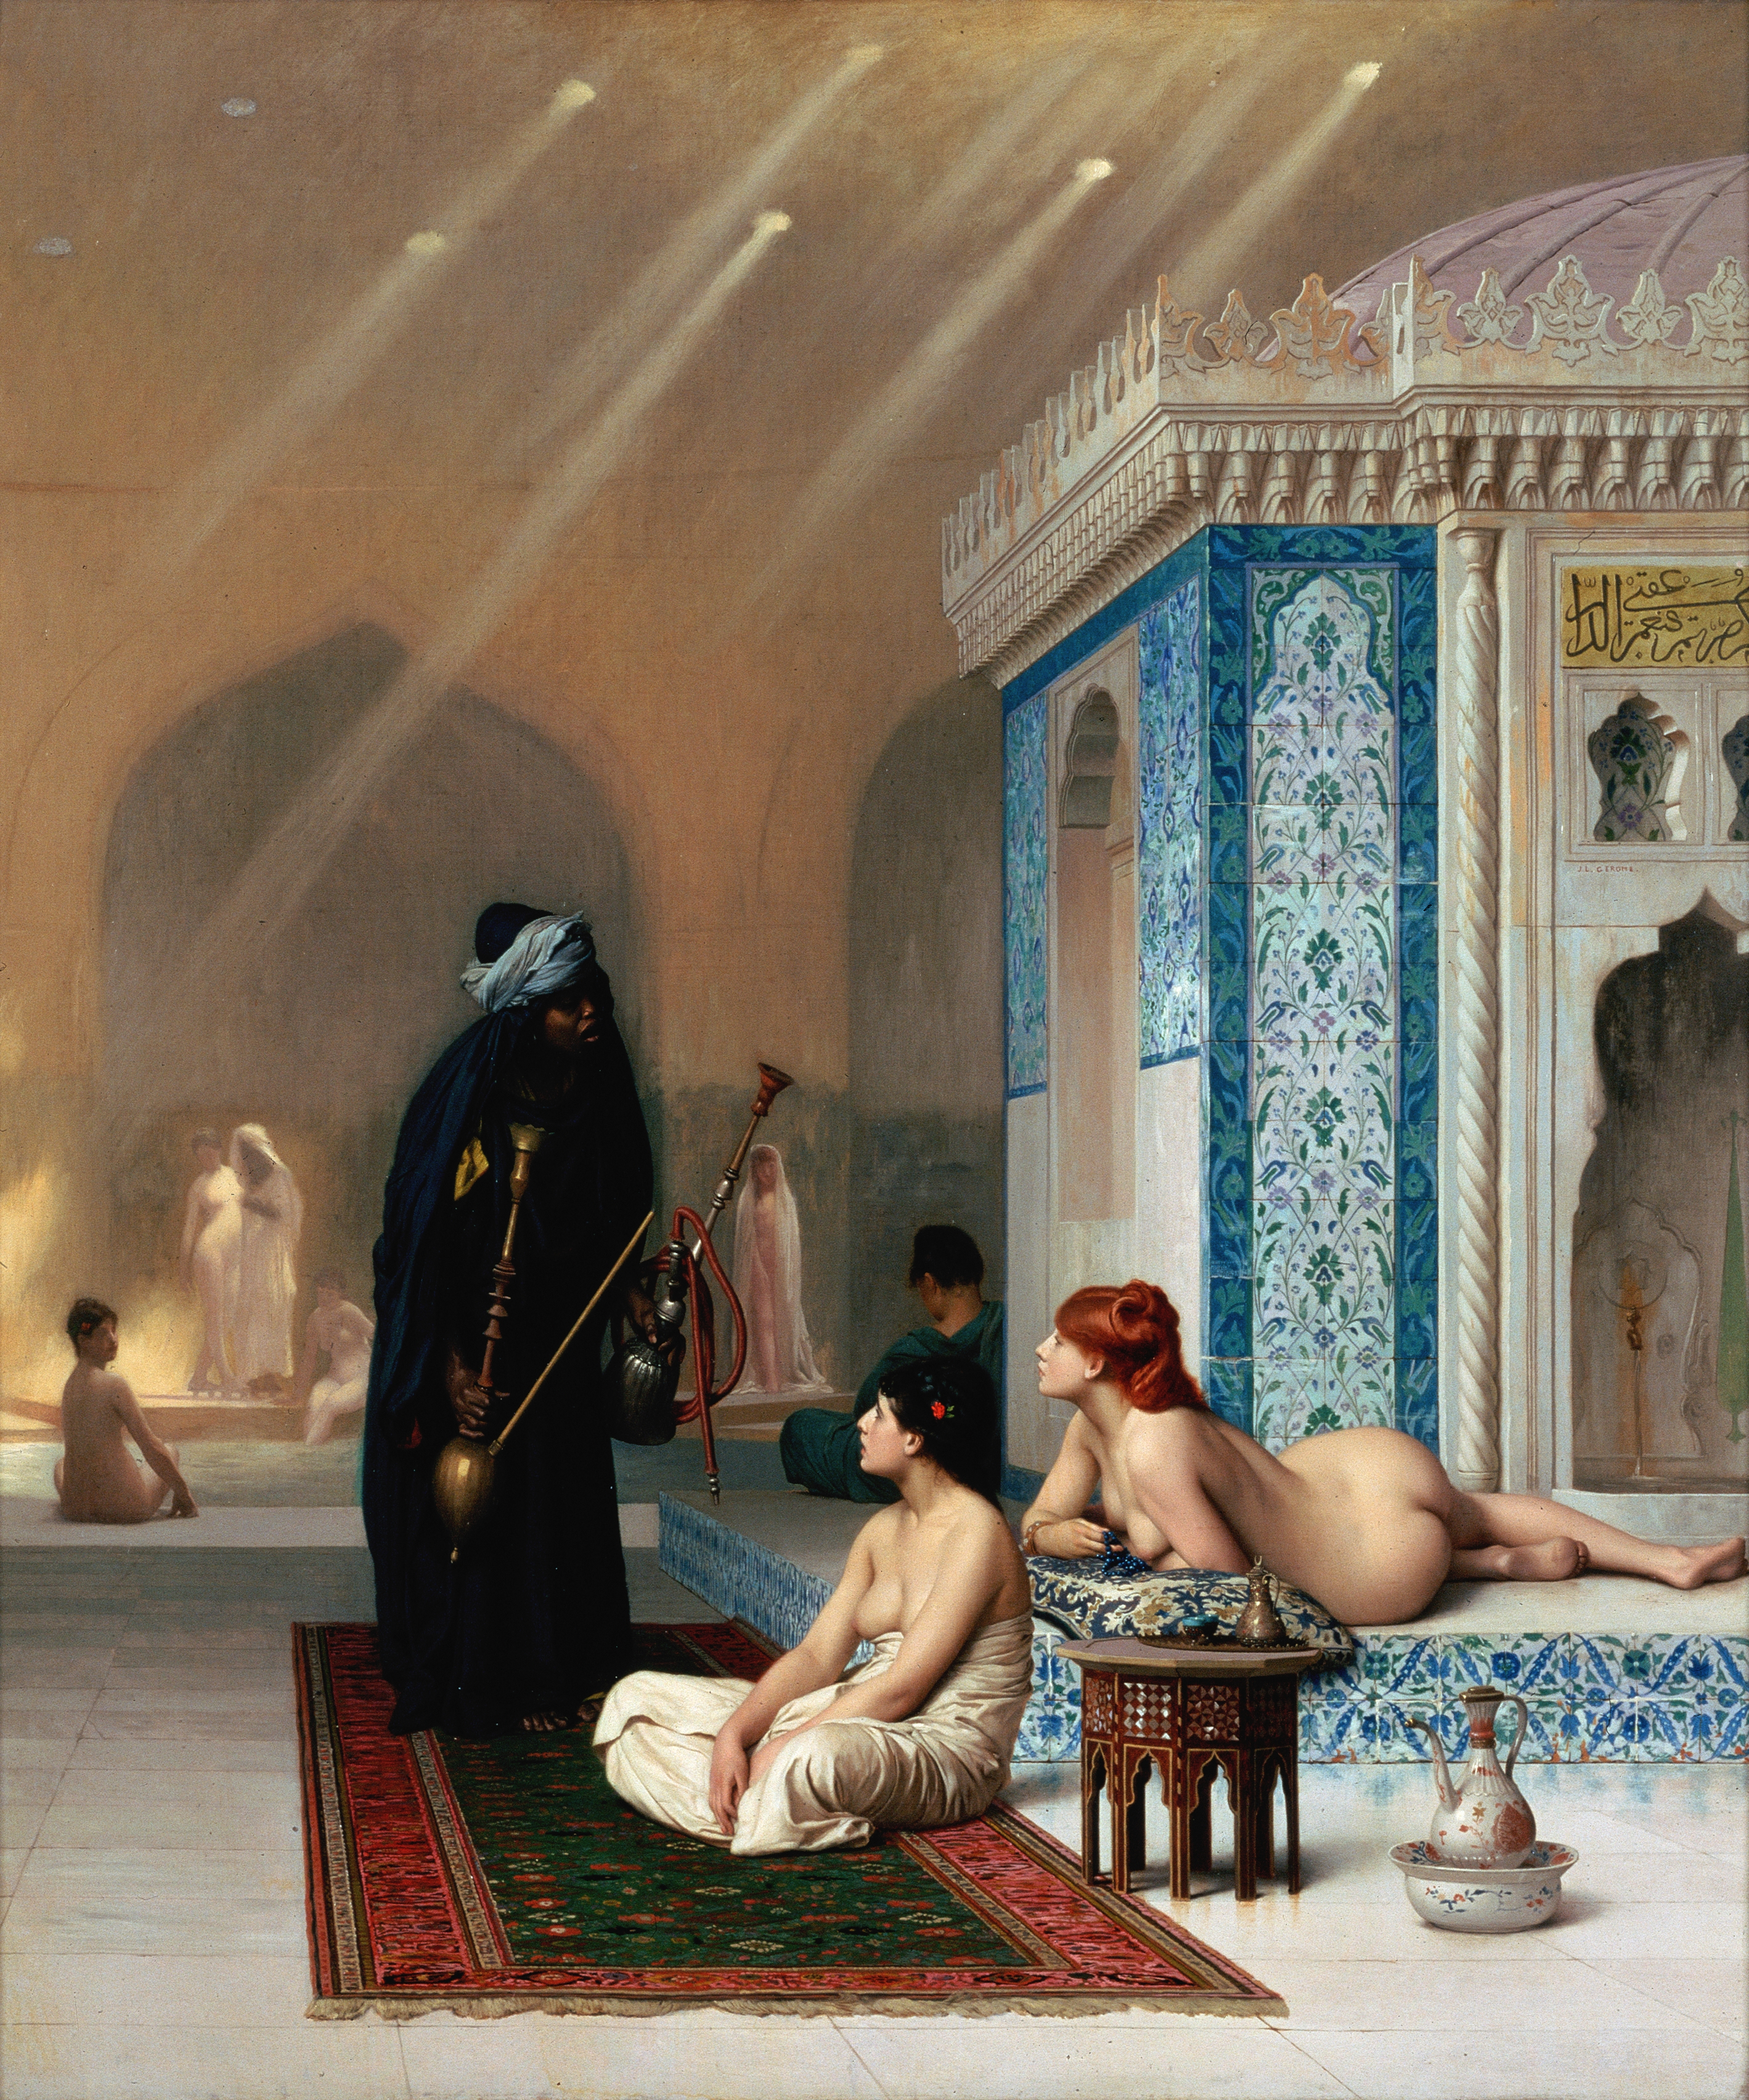 Султан ебет наложниц порно маскарад. Смотреть онлайн порно видео